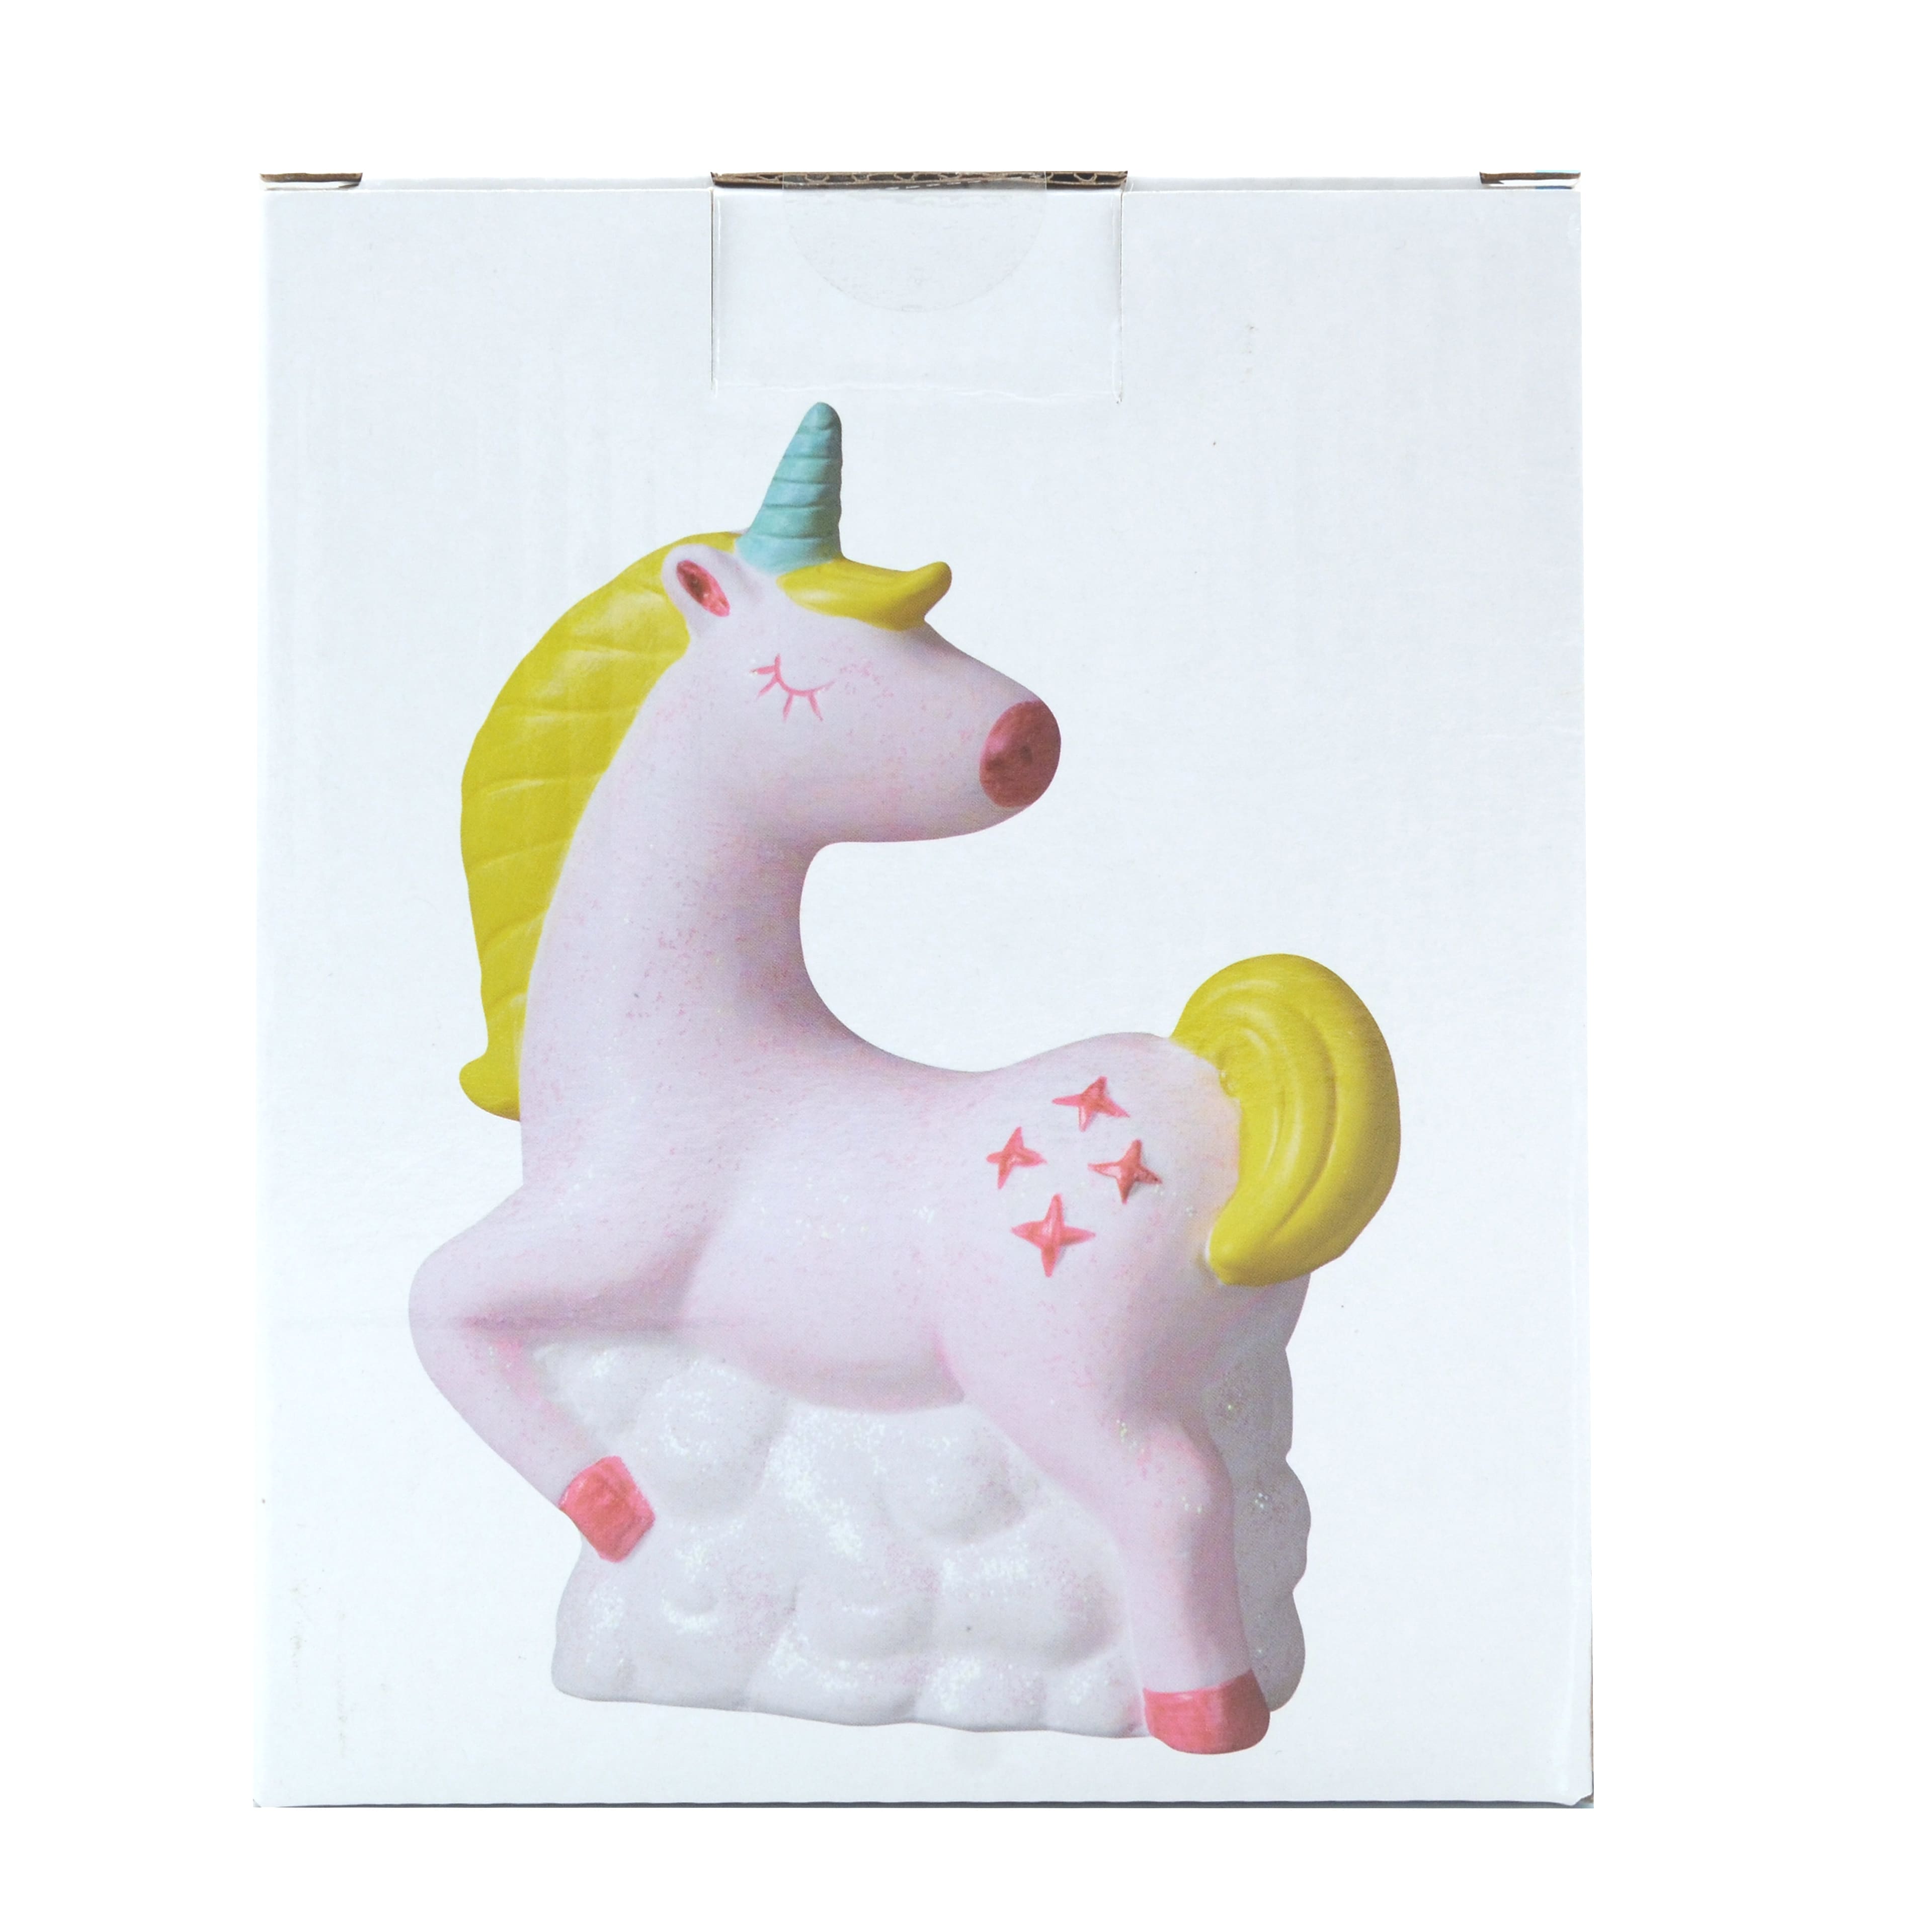 IKraft Paint Your Own Unicorn & Rainbow Kids Arts and crafts Kit